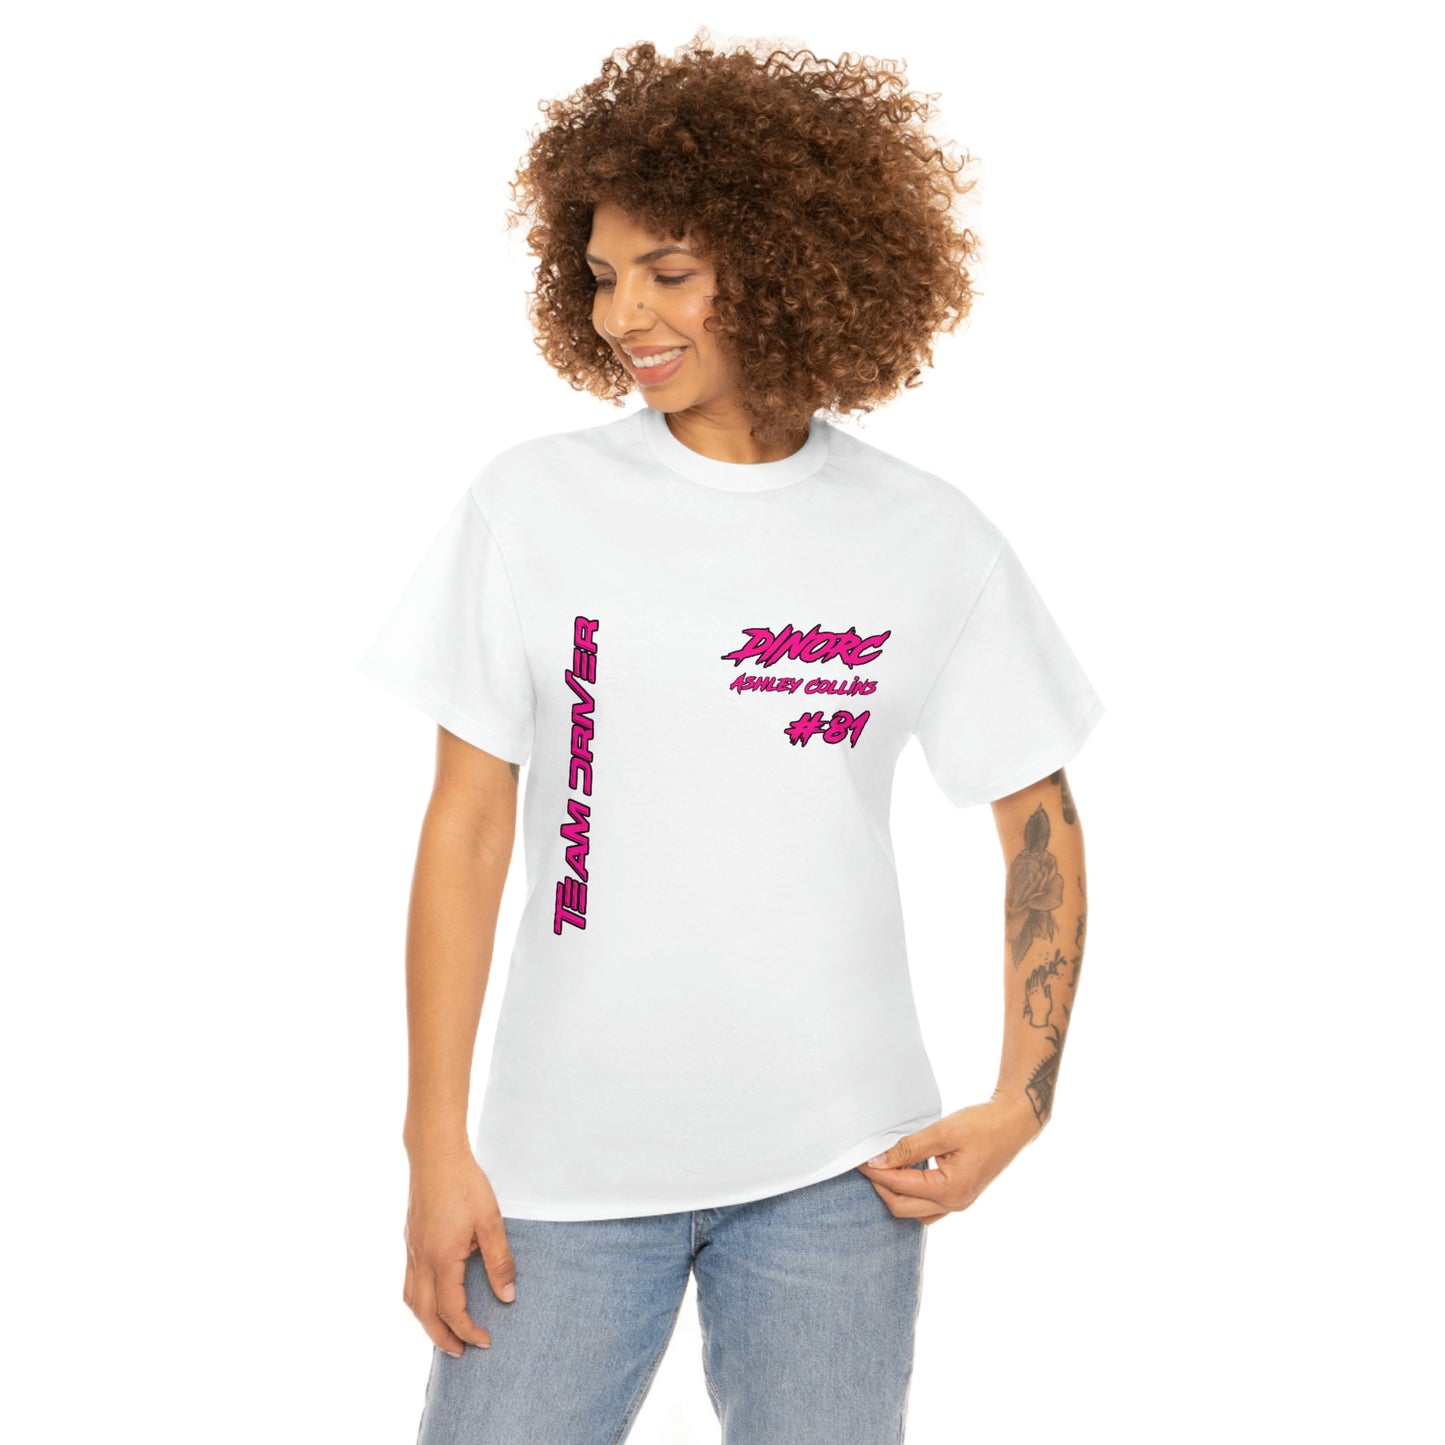 Team Driver Ashley Collins Dino's Divas Front and Back DinoRc Logo T-Shirt S-5x 5 colors